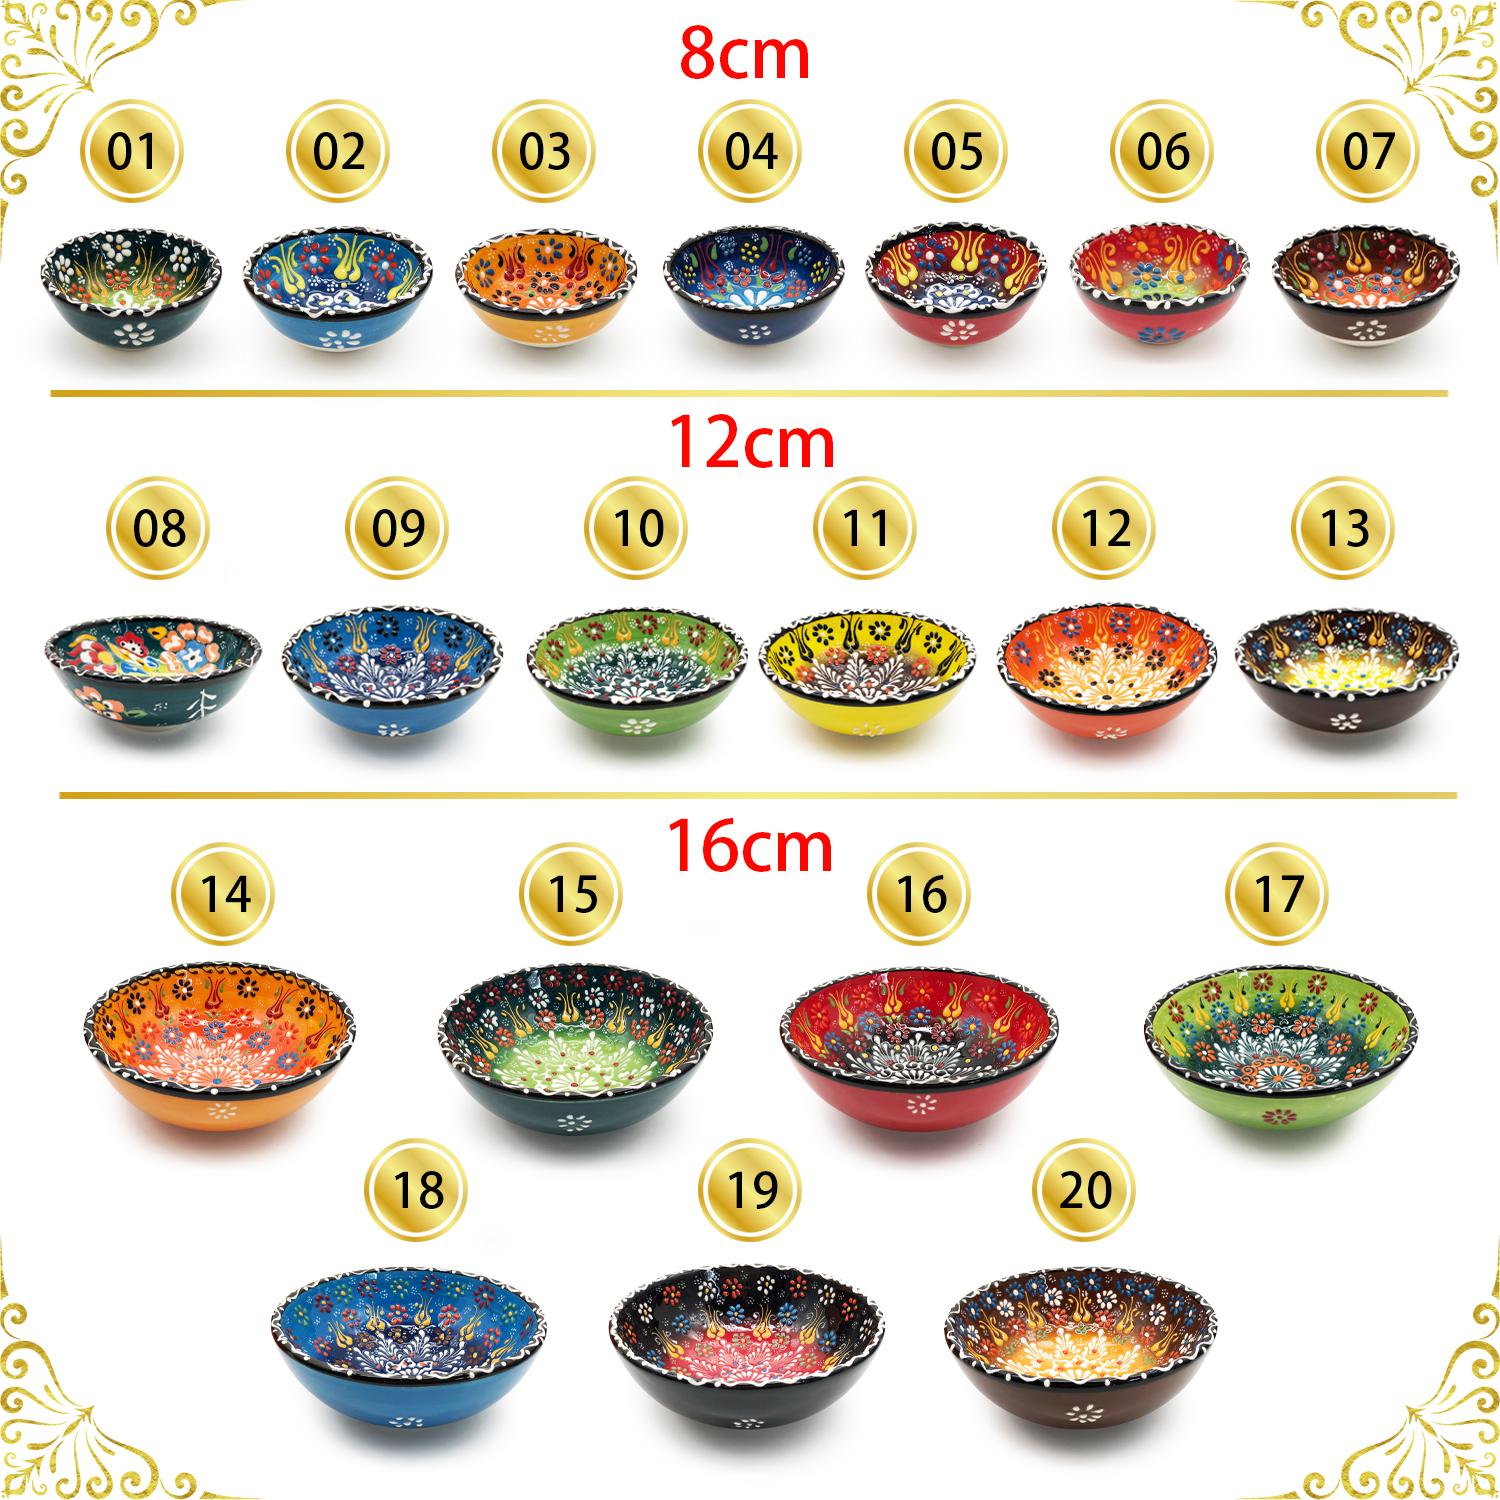 80MM手繪土耳其傳統工藝陶瓷碗， 土耳其餐具奧斯曼帝國浮雕圖案土耳其藝術時尚潮物(VTR-CERAMIC-BOWL-80MM-30002)